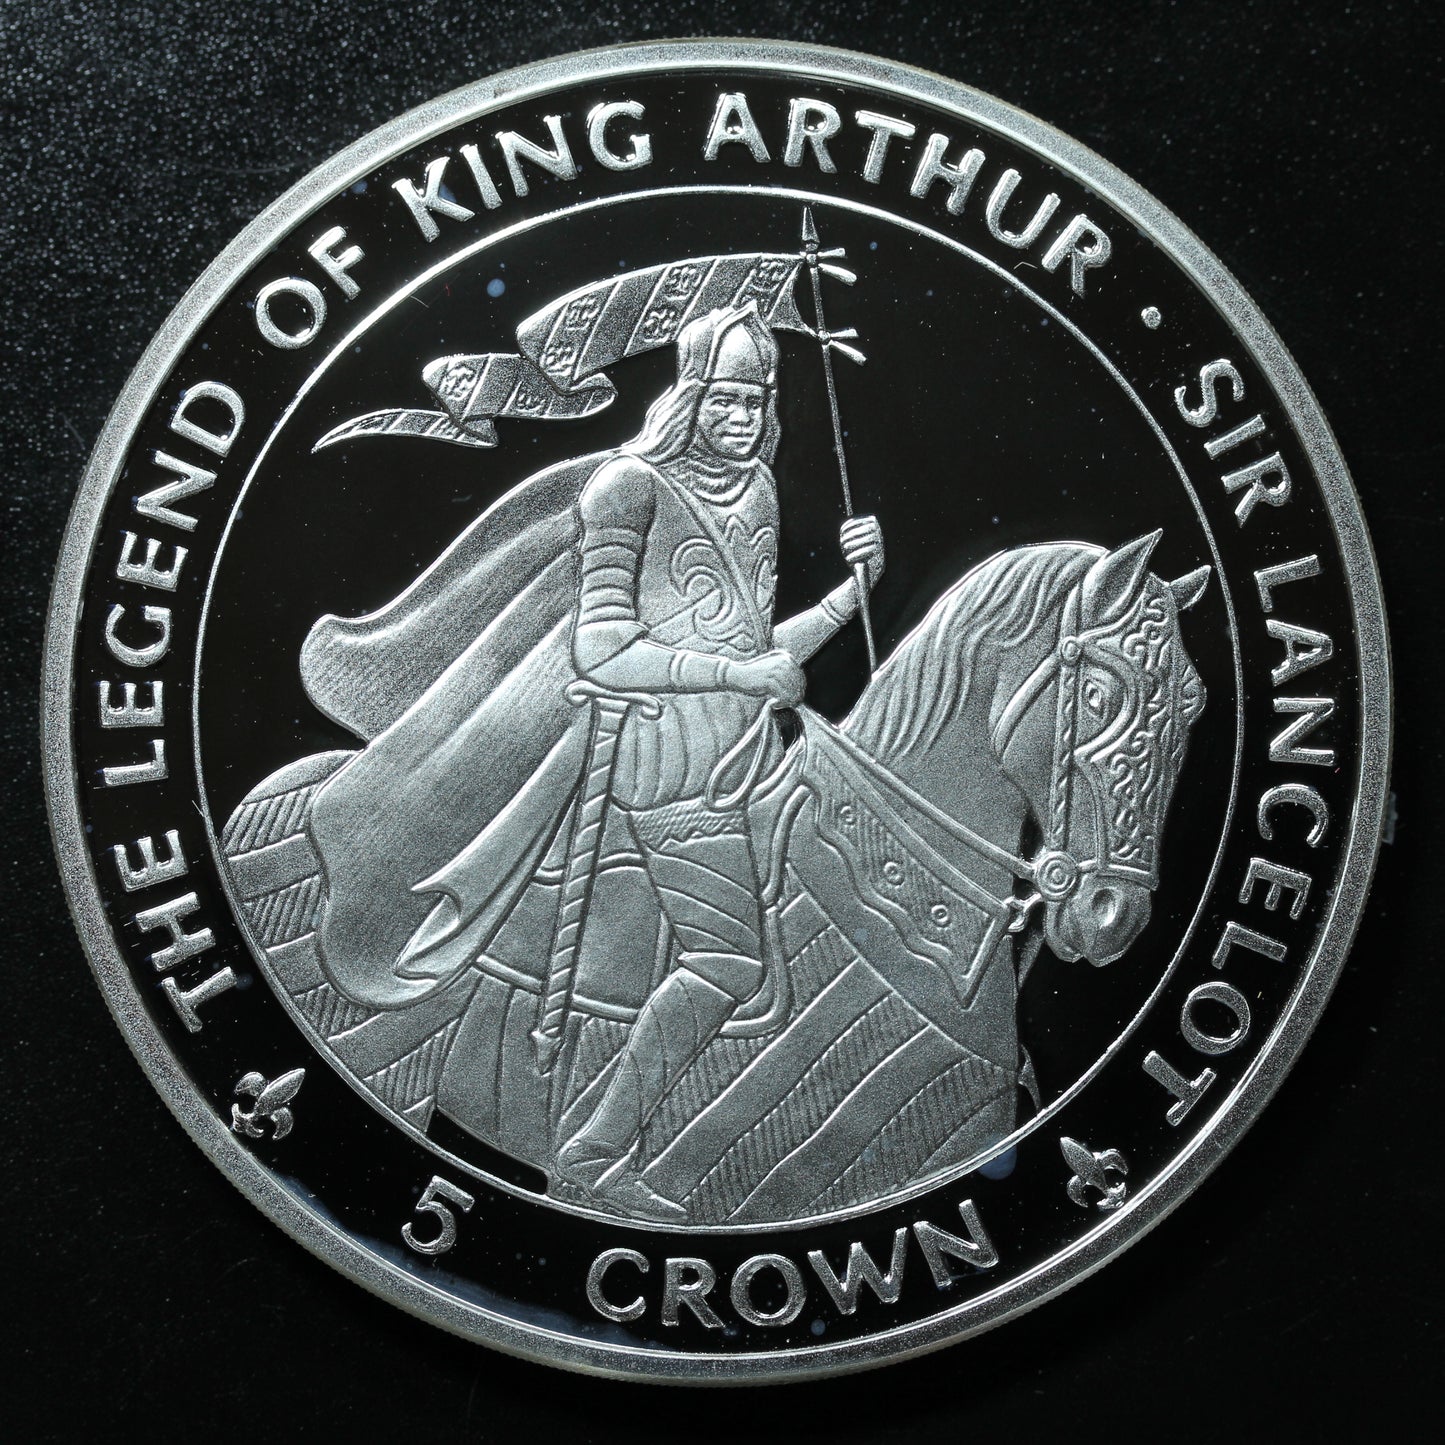 1996 Isle Of Man 999.9 Fine Silver 5 Crown - Legend of King Arthur "Sir Lancelot"